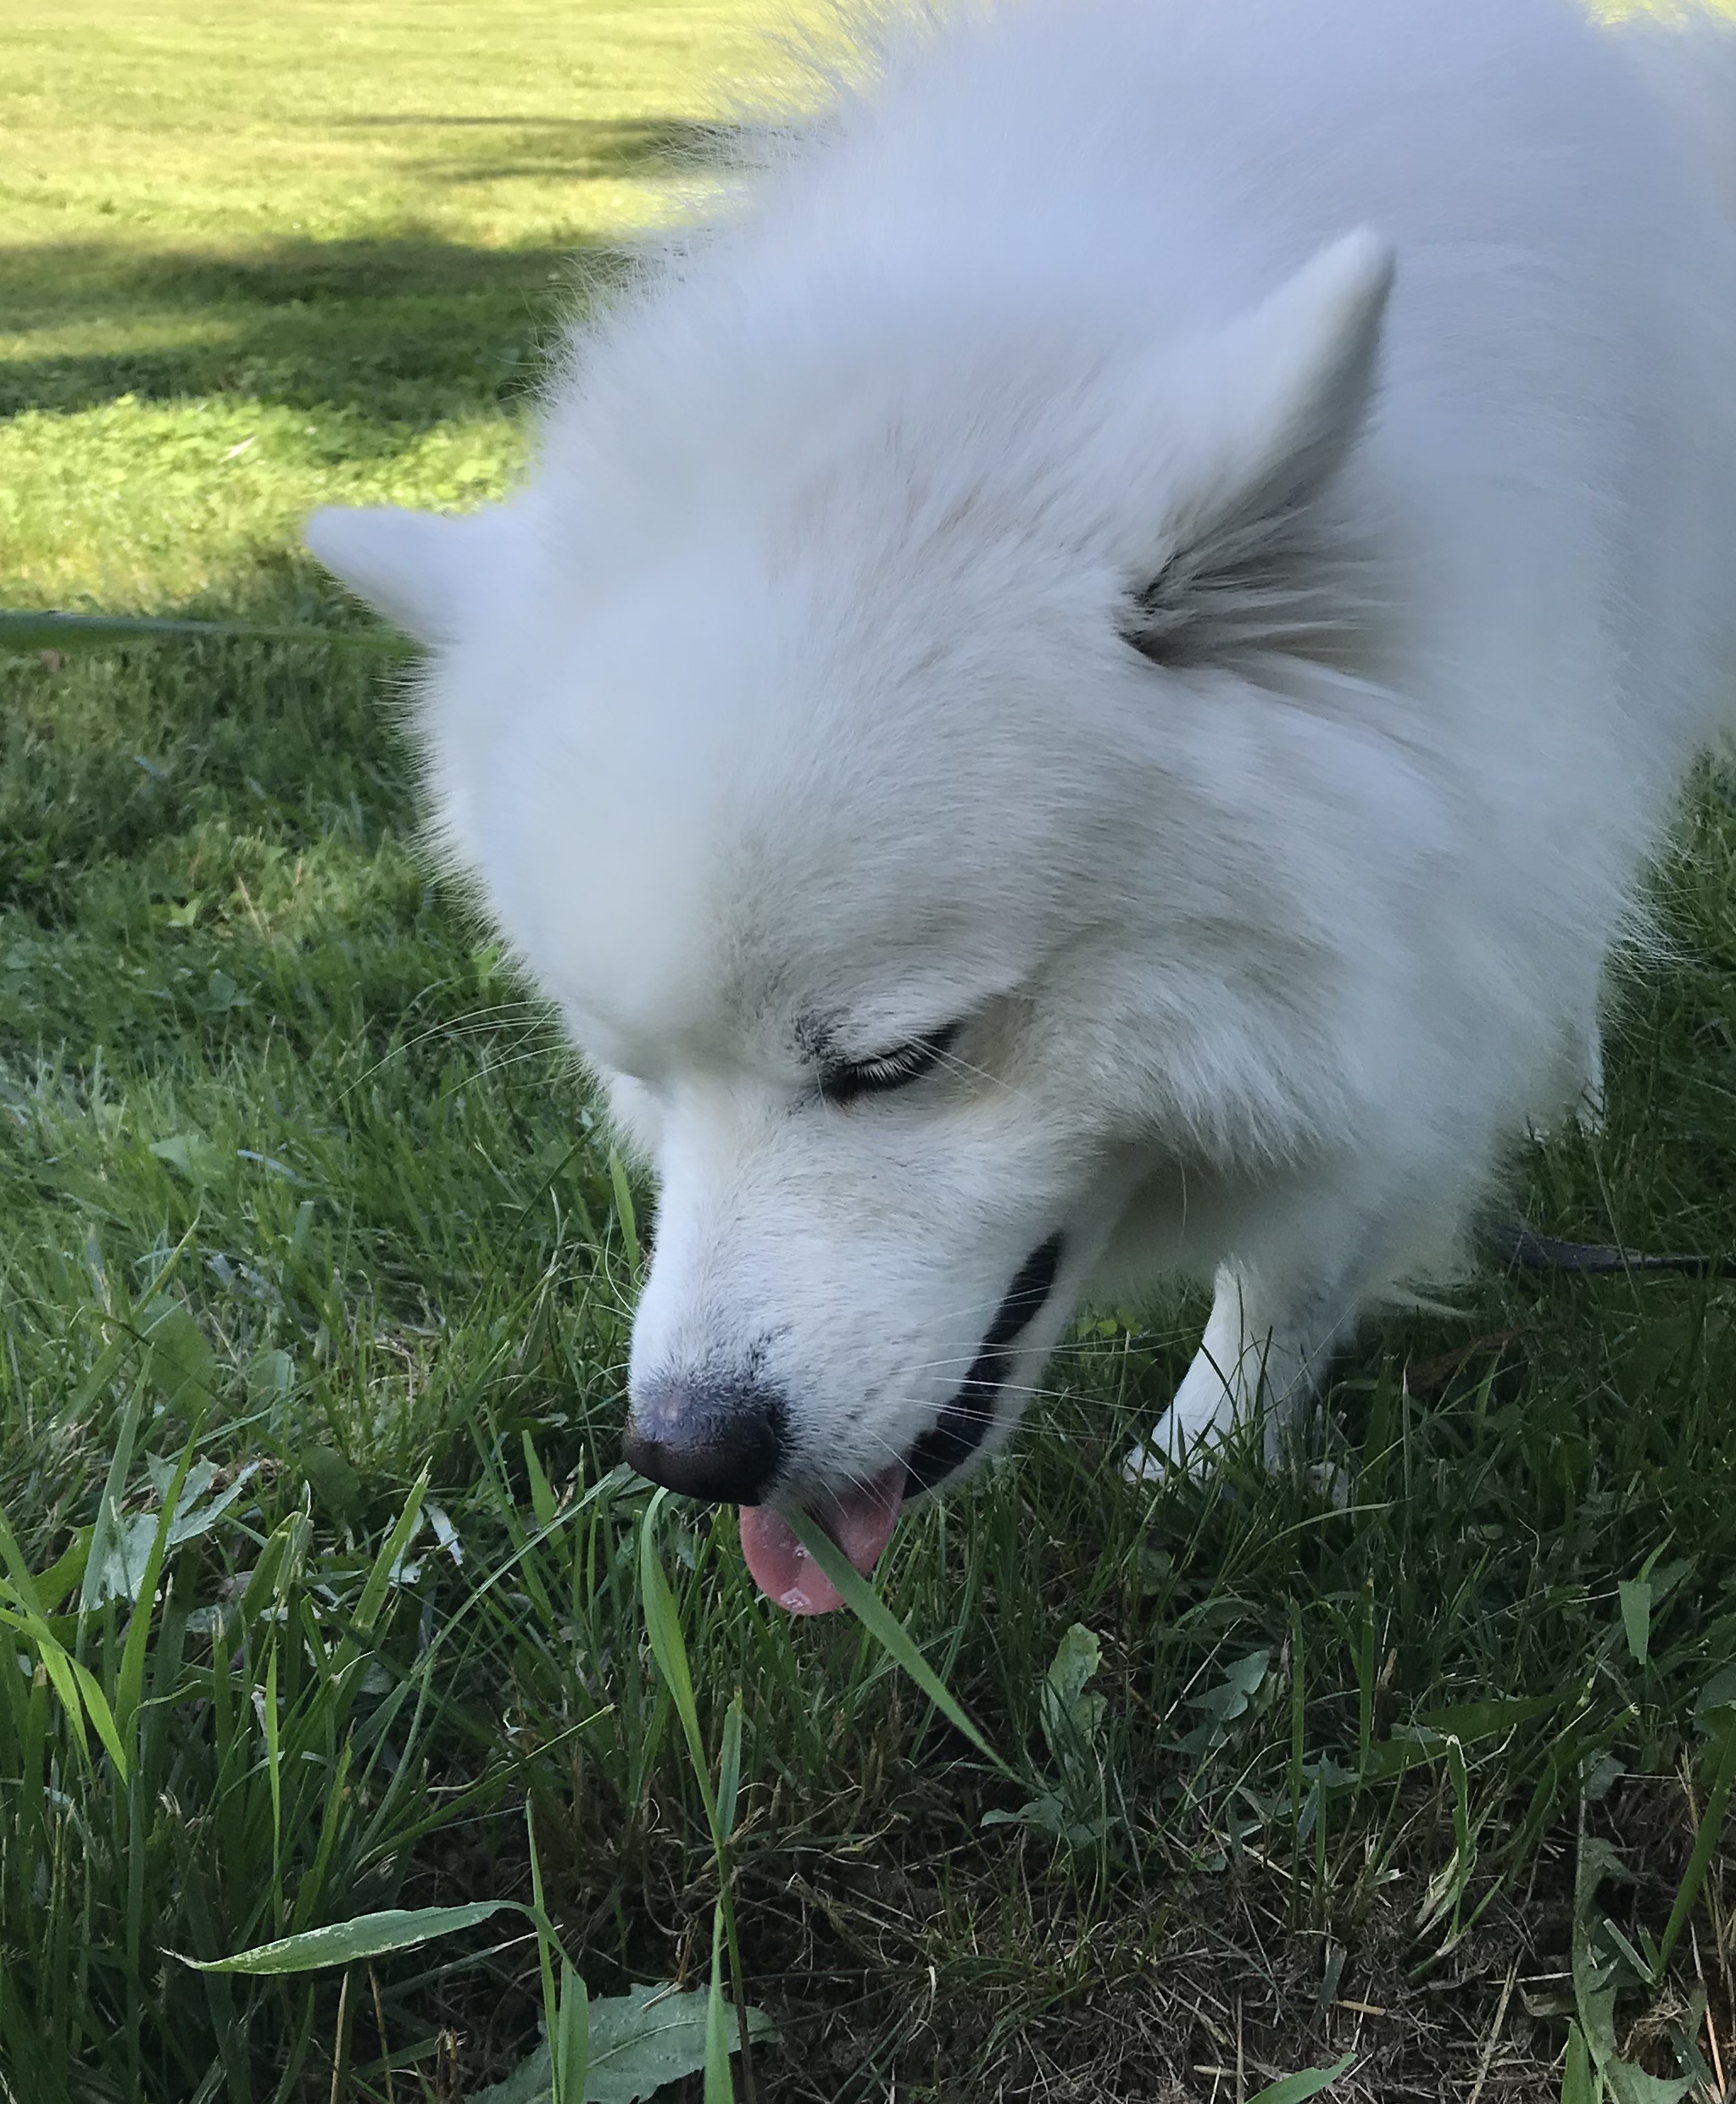 Dogs Eat Grass